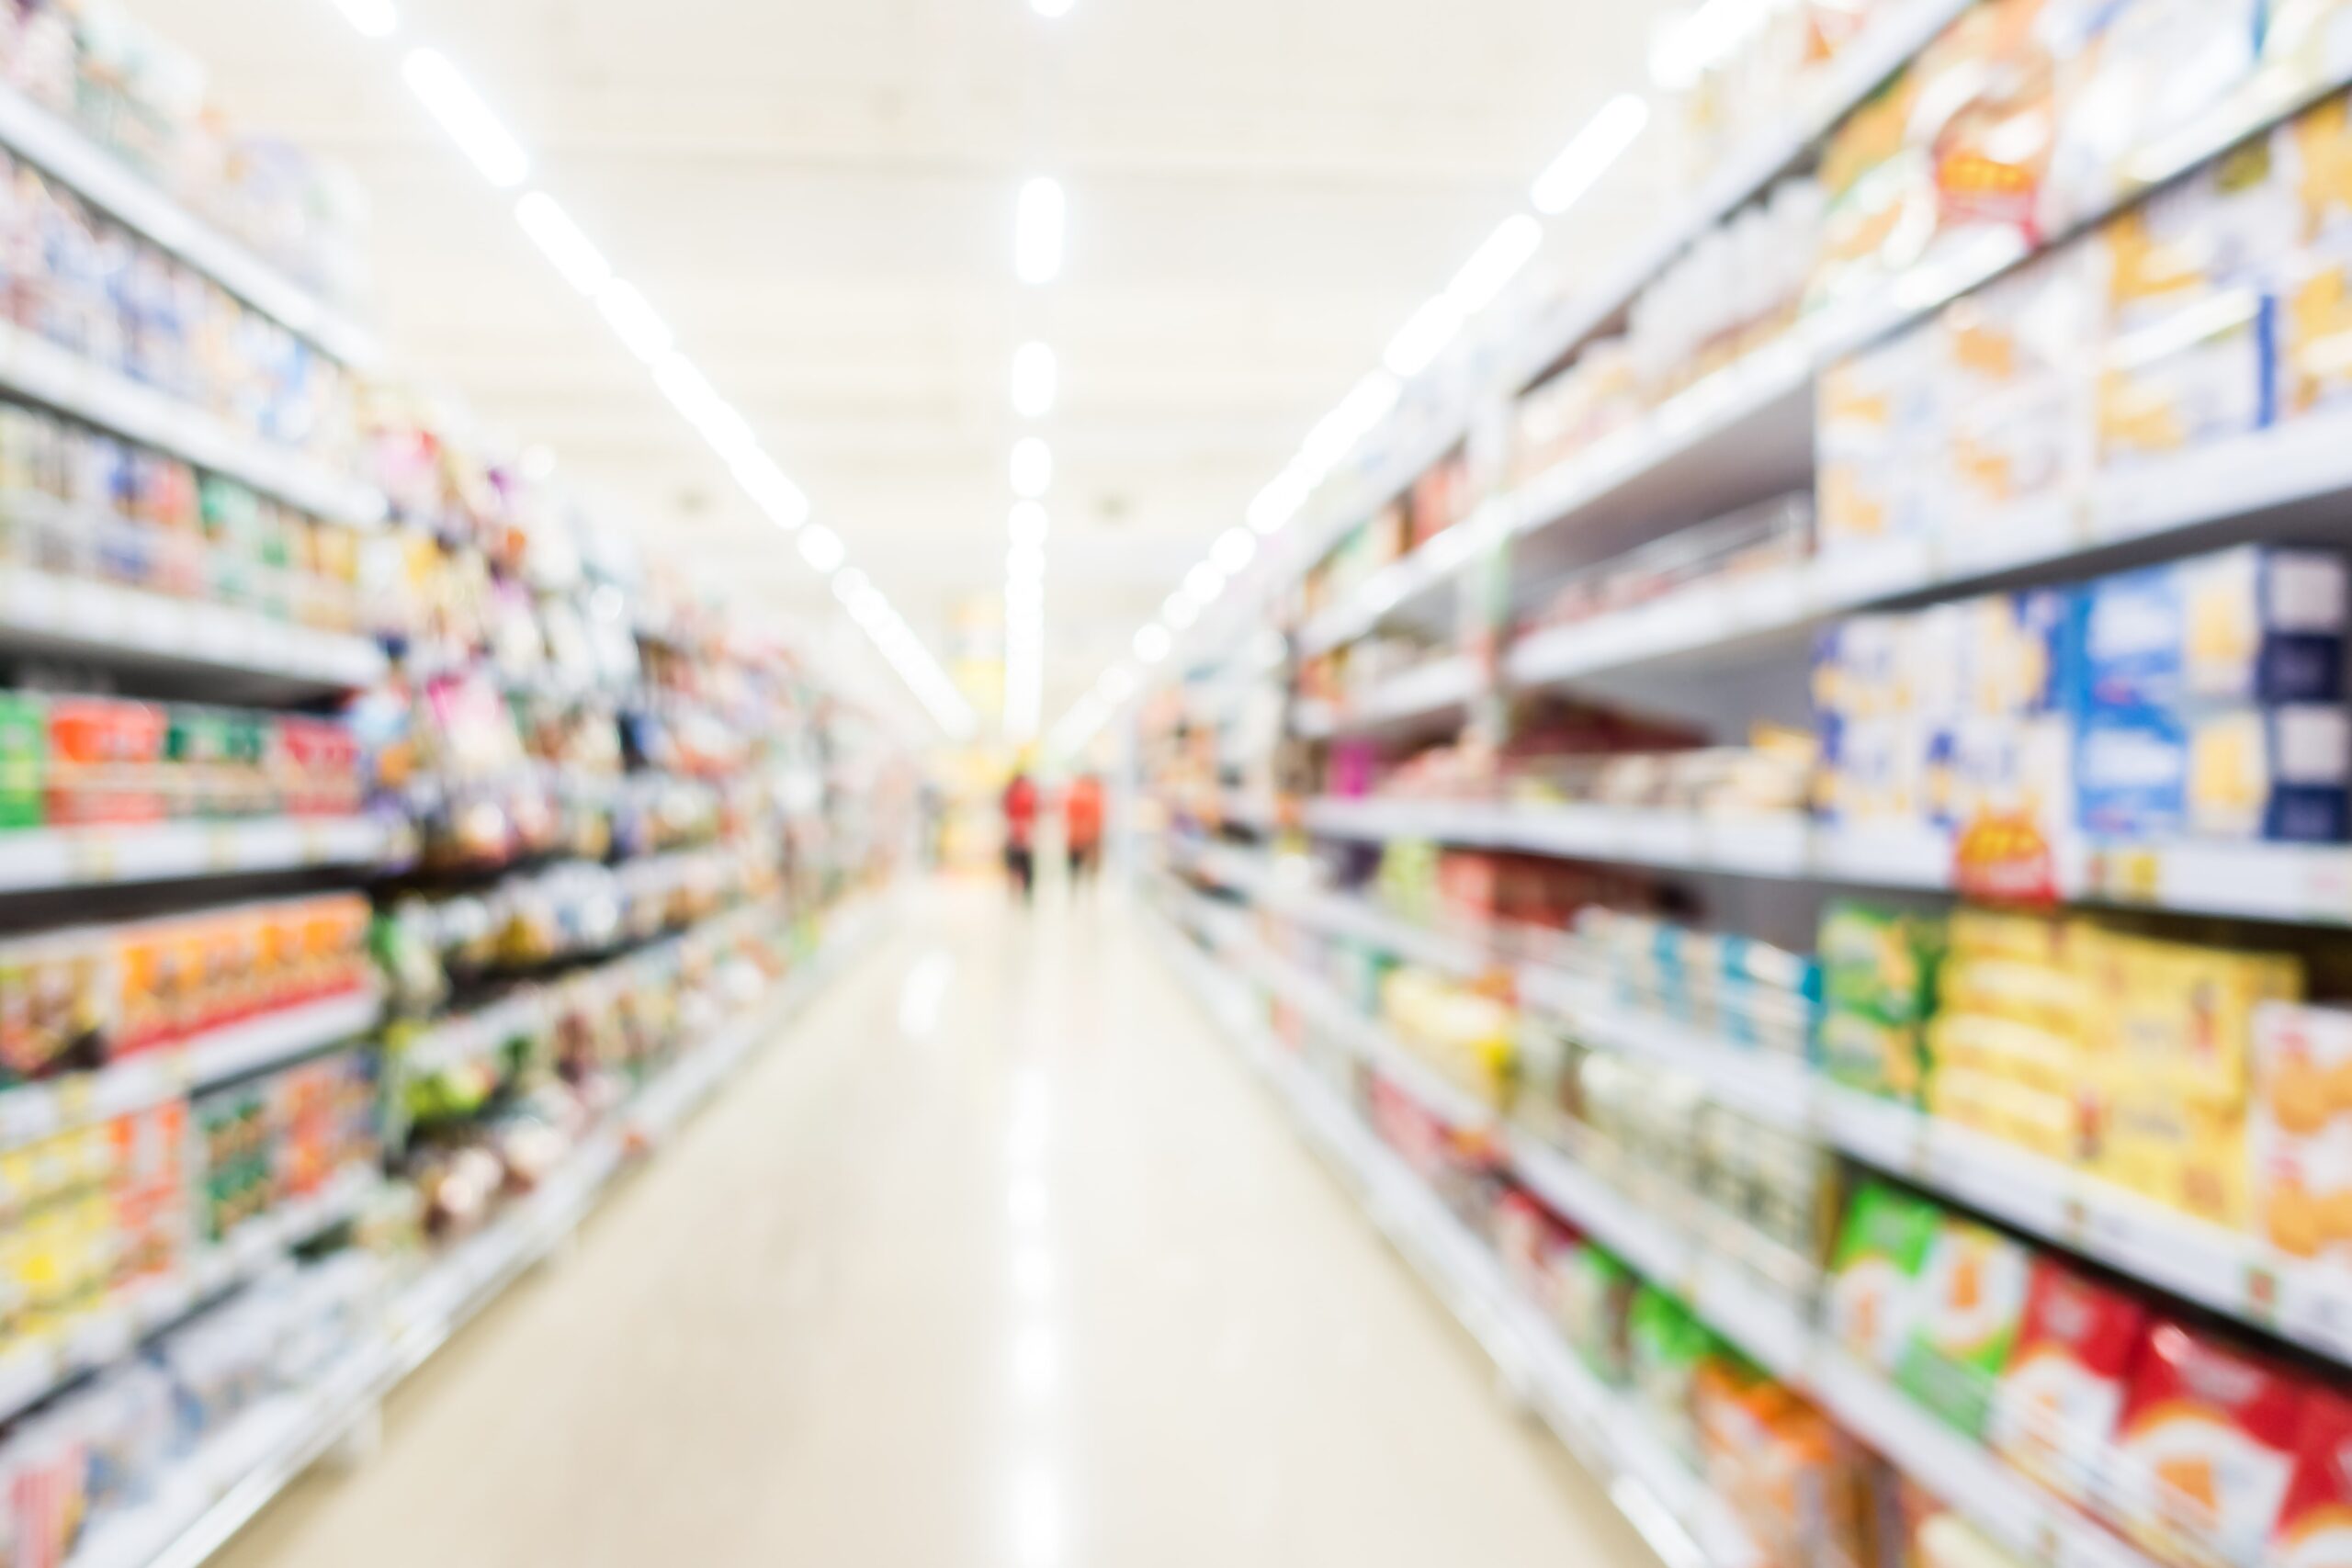 Contabilidade gerencial para supermercados: como aumentar a rentabilidade